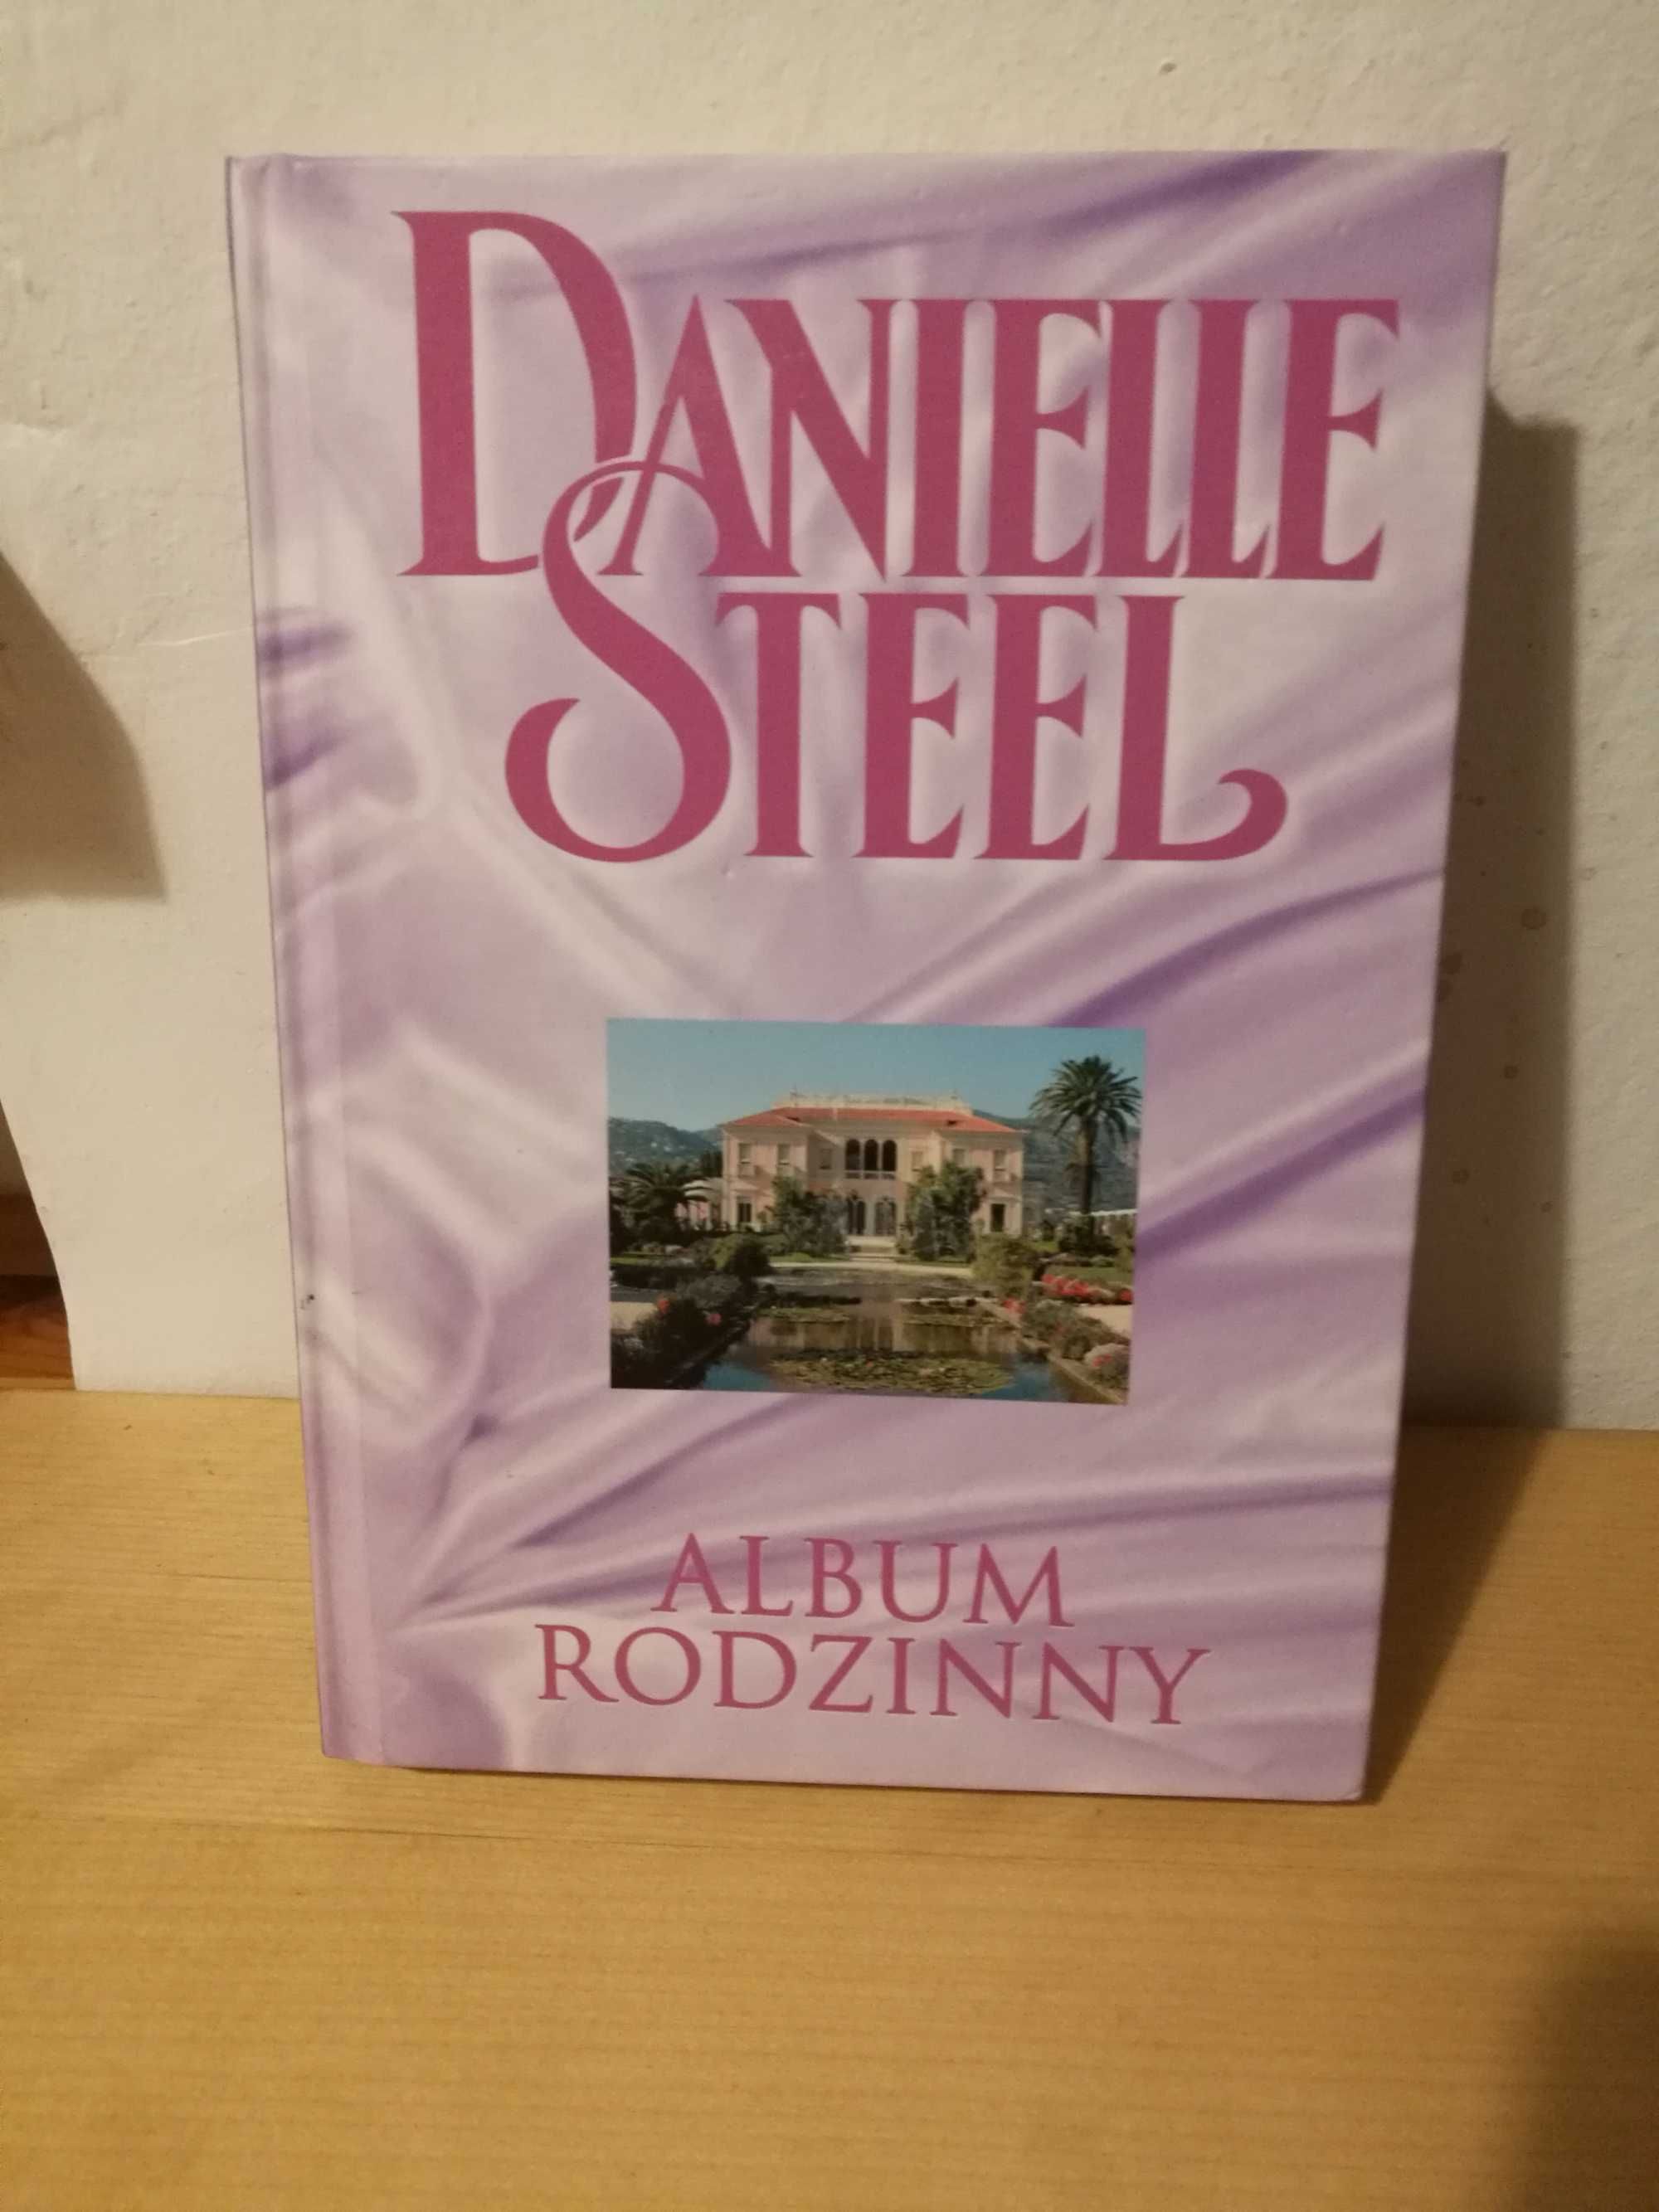 Danielle Steel "Album rodzinny"